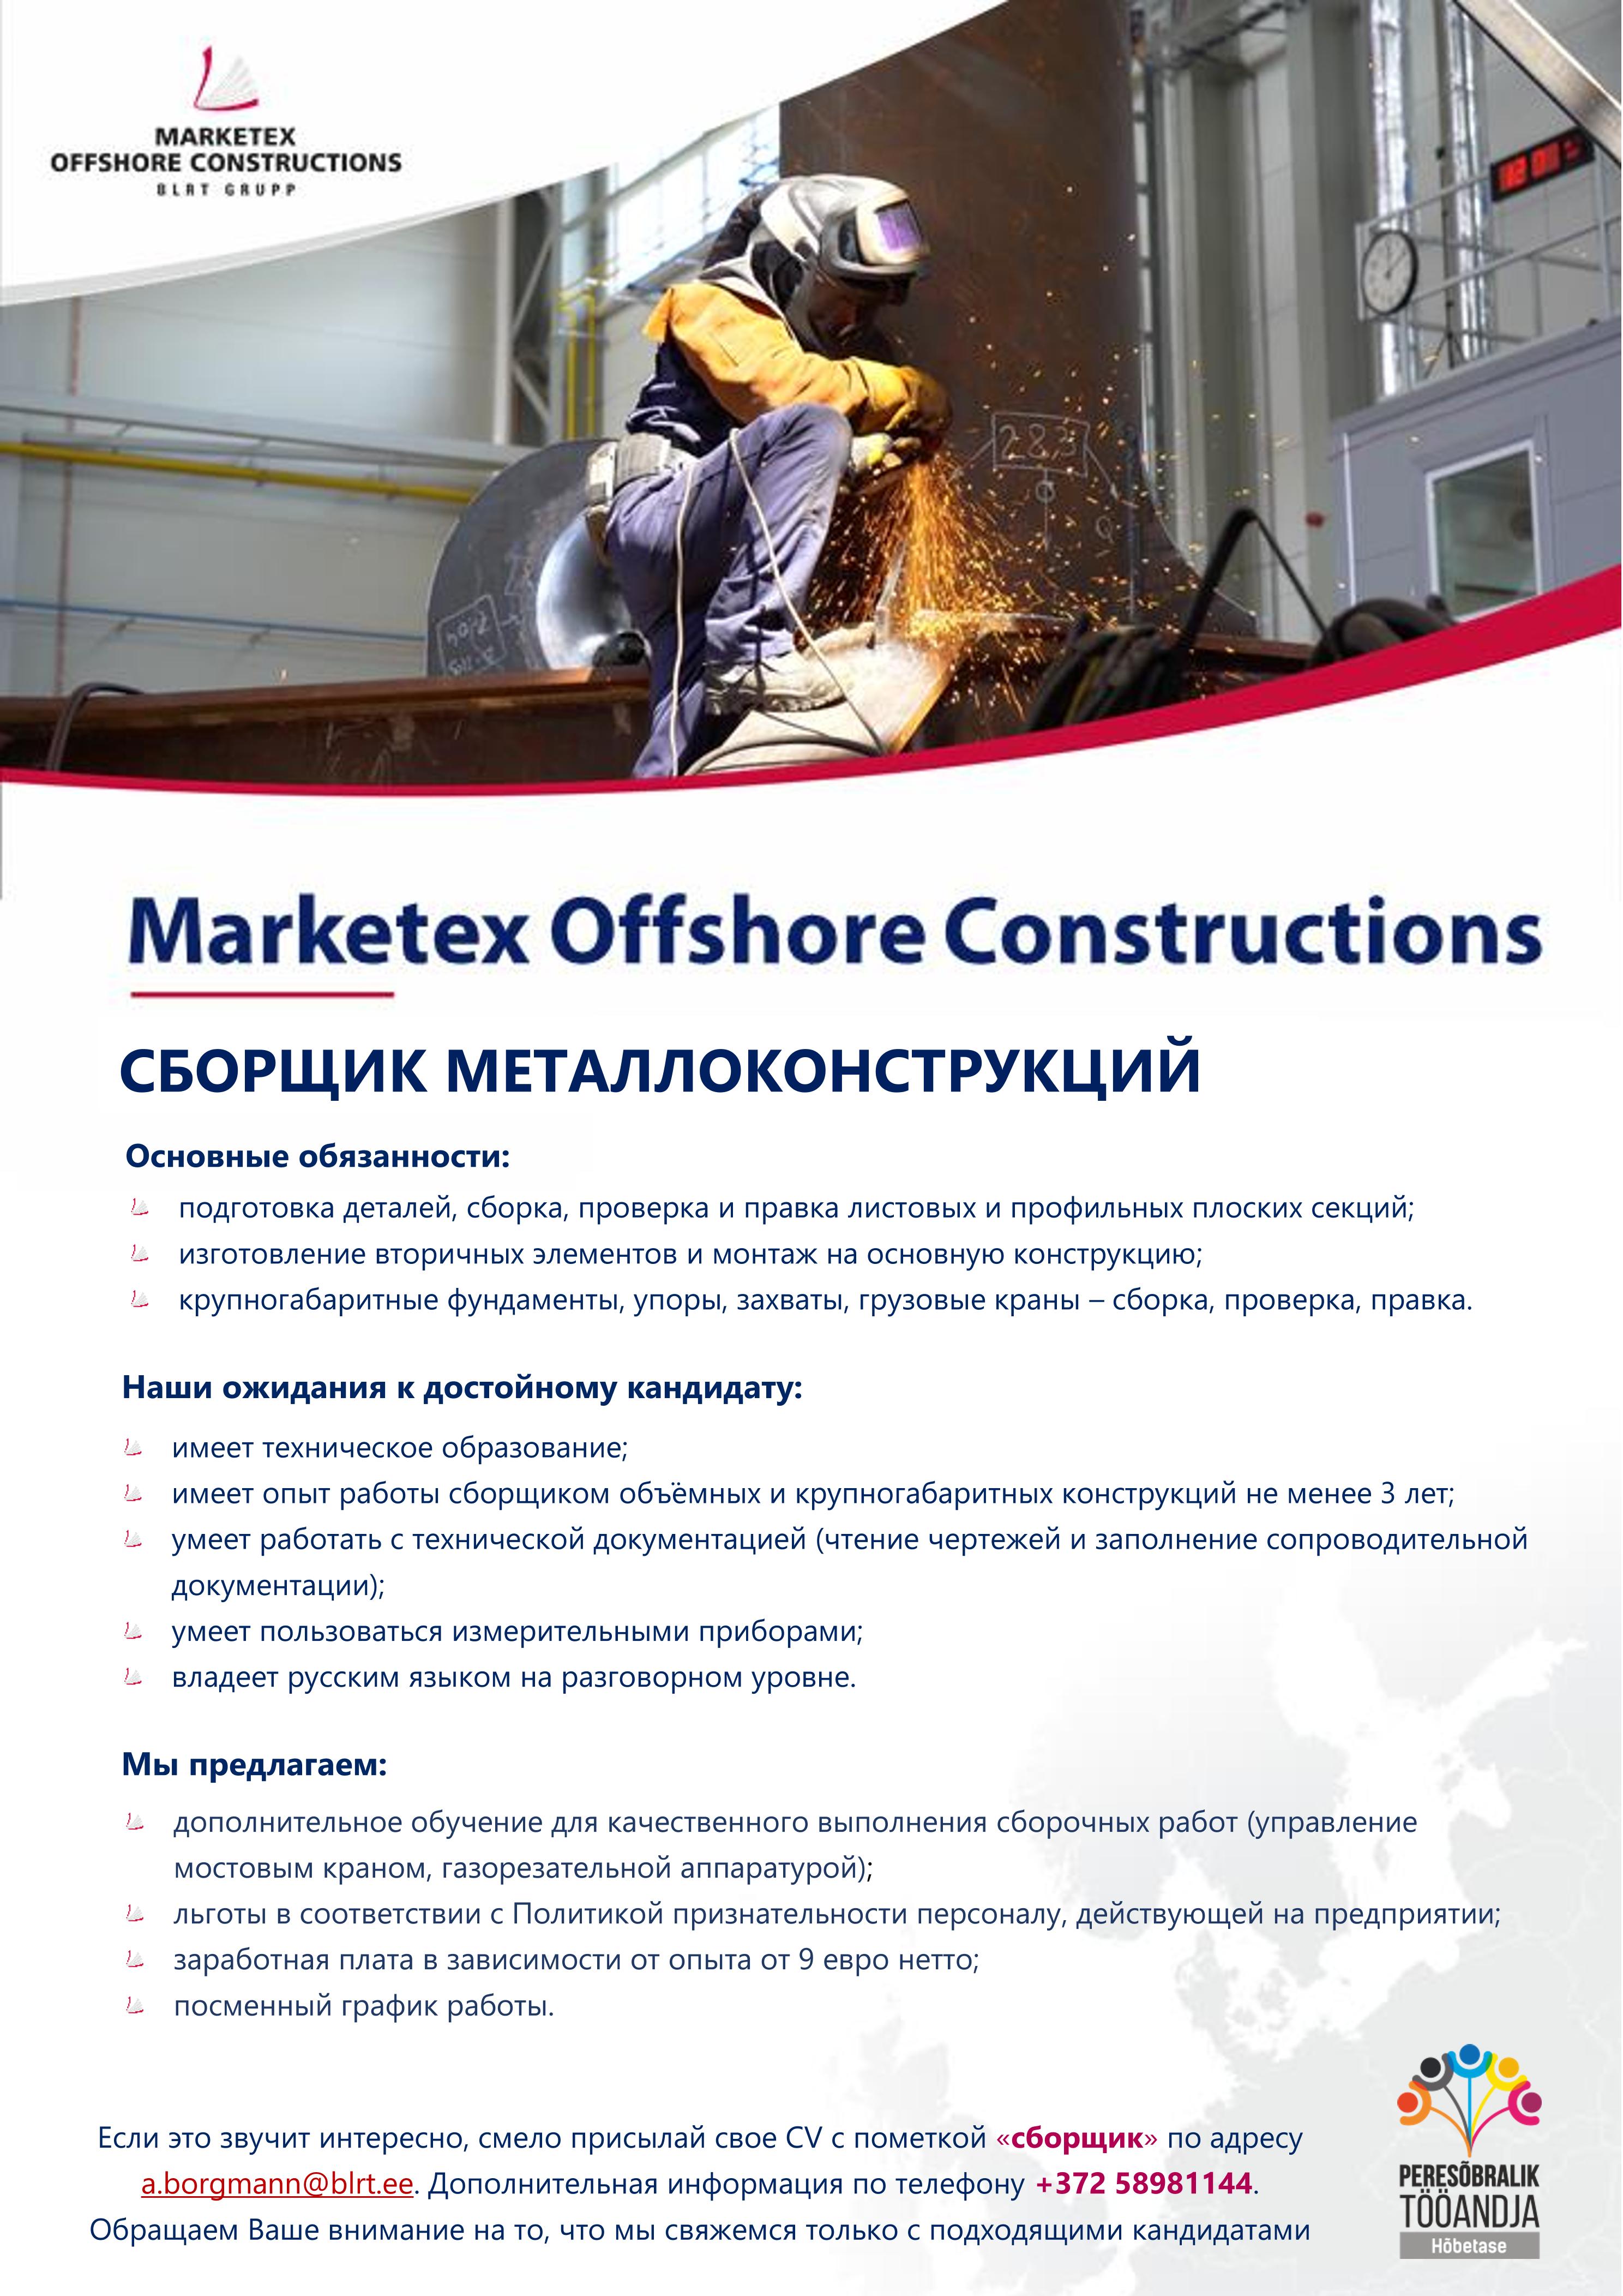 Marketex Offshore Constructions OU Сборщик металлоконструкций